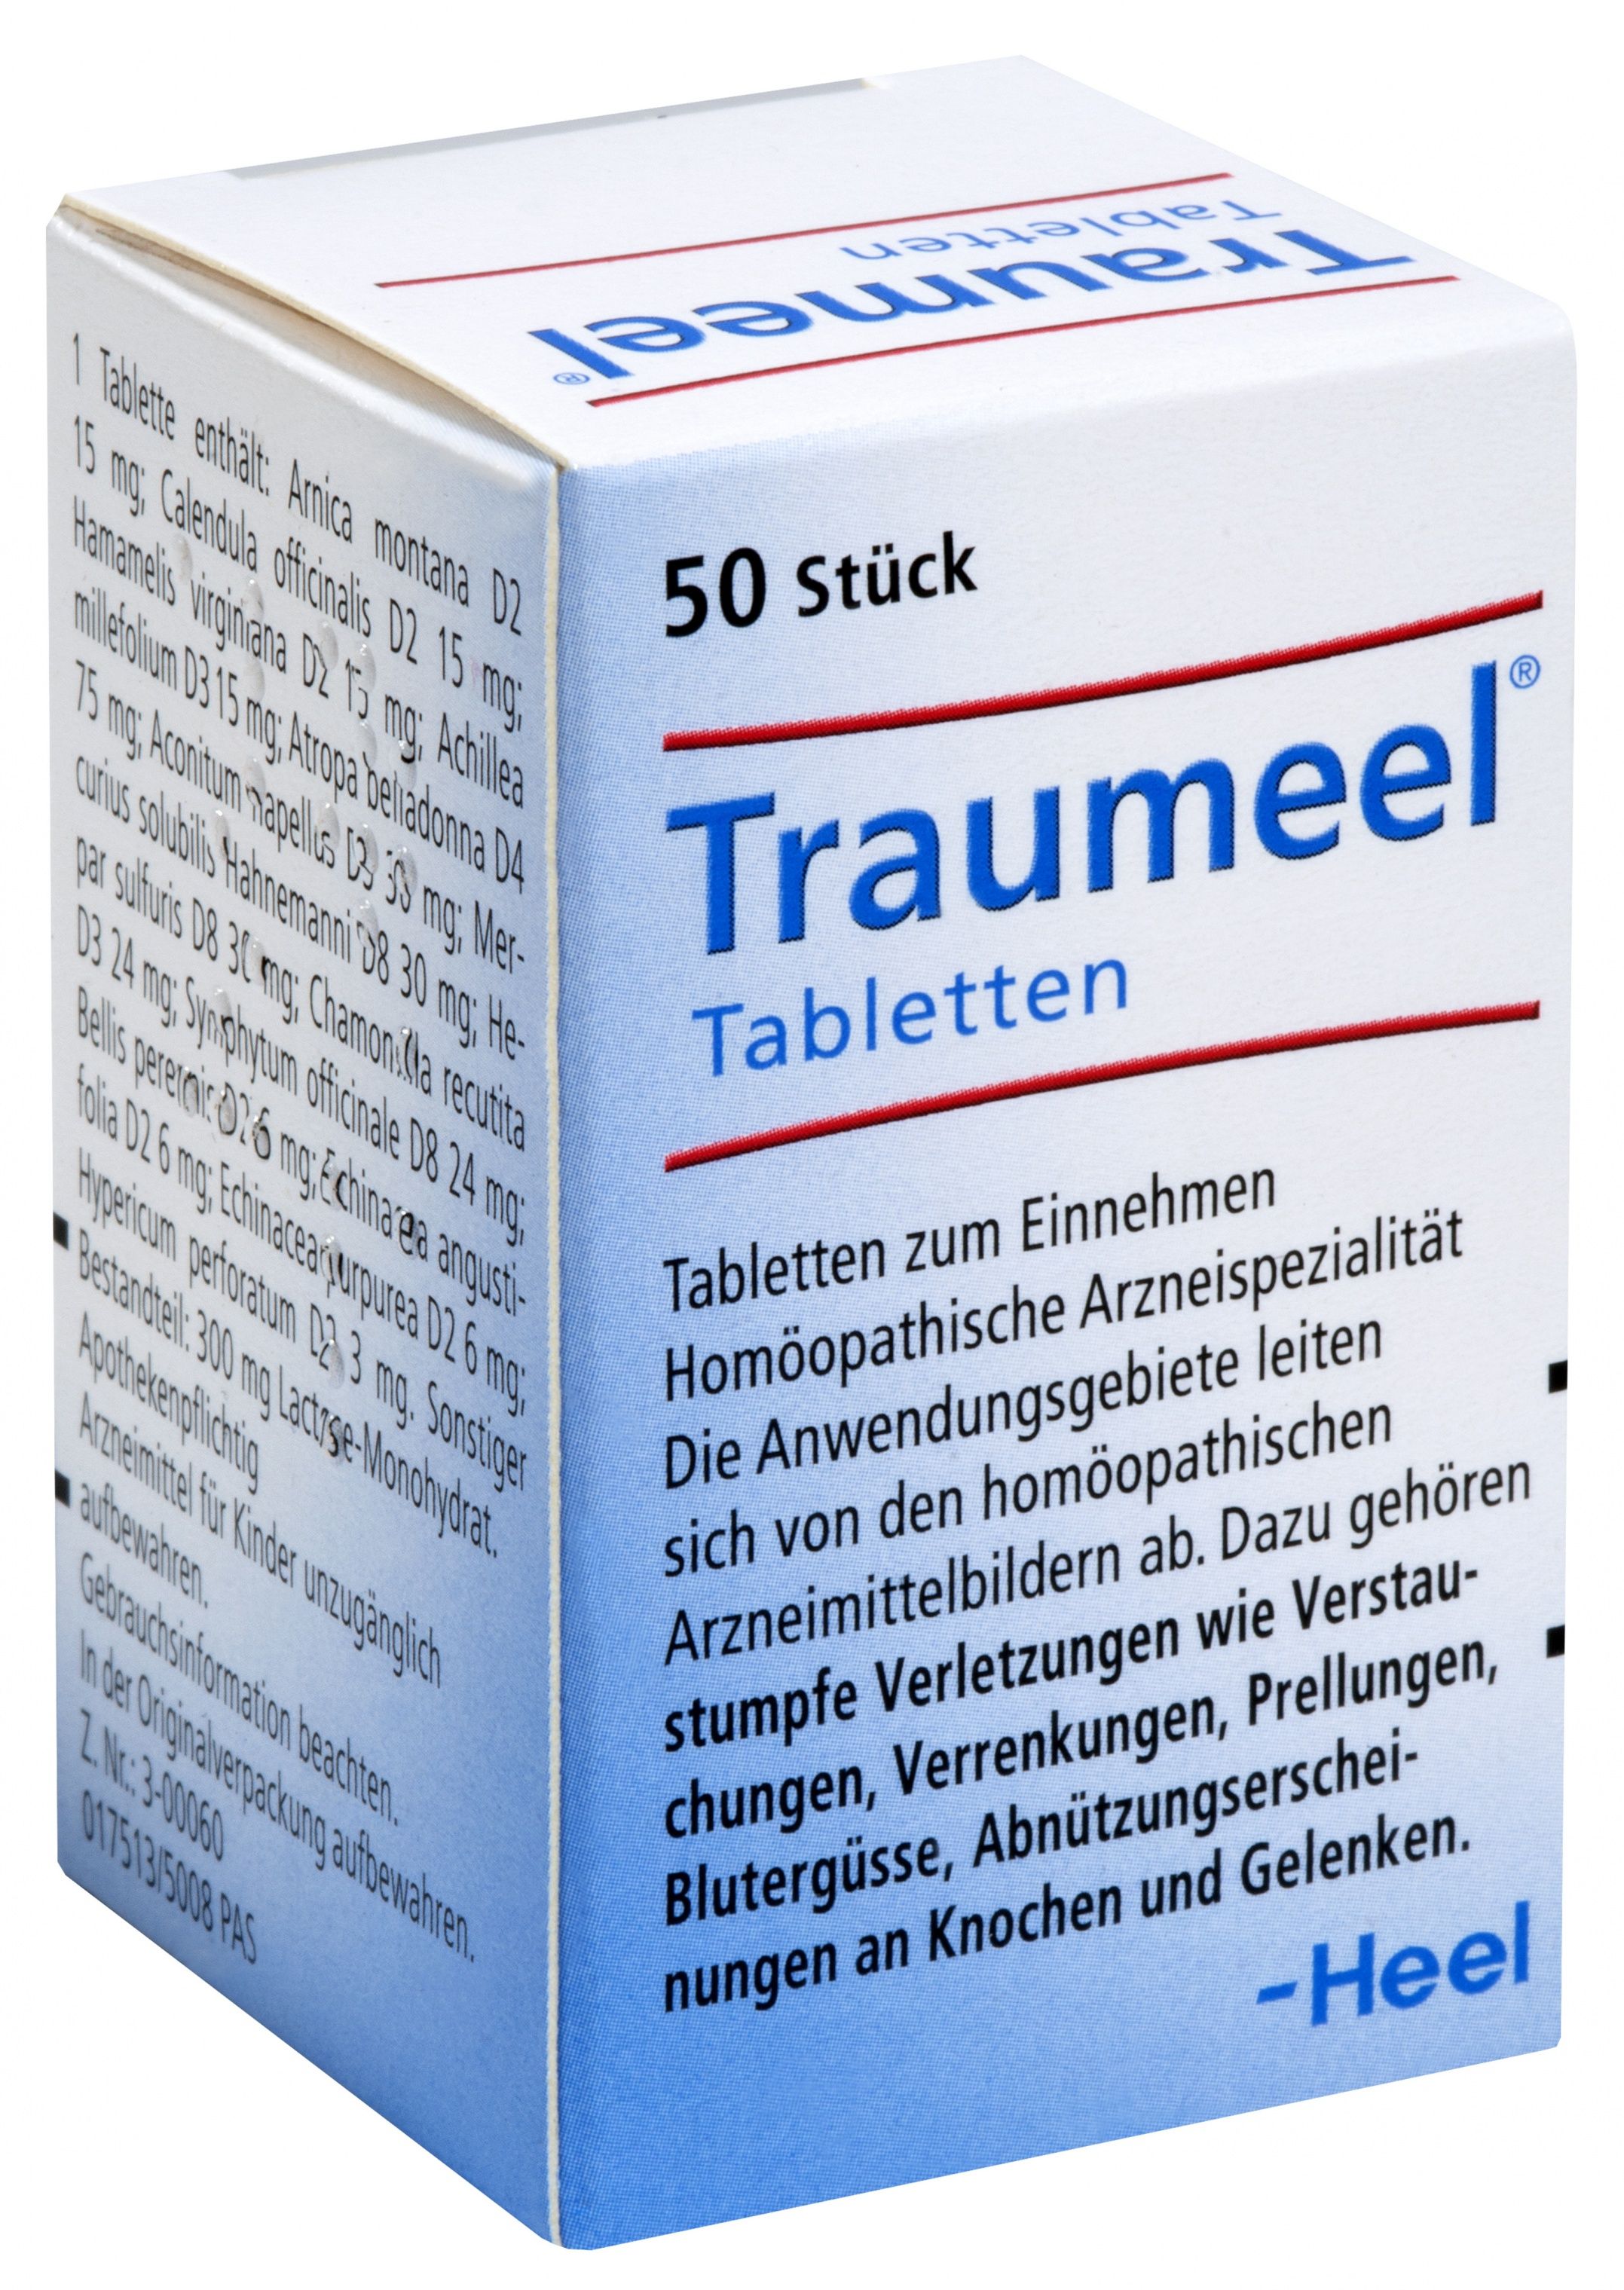 Abbildung Traumeel - Tabletten